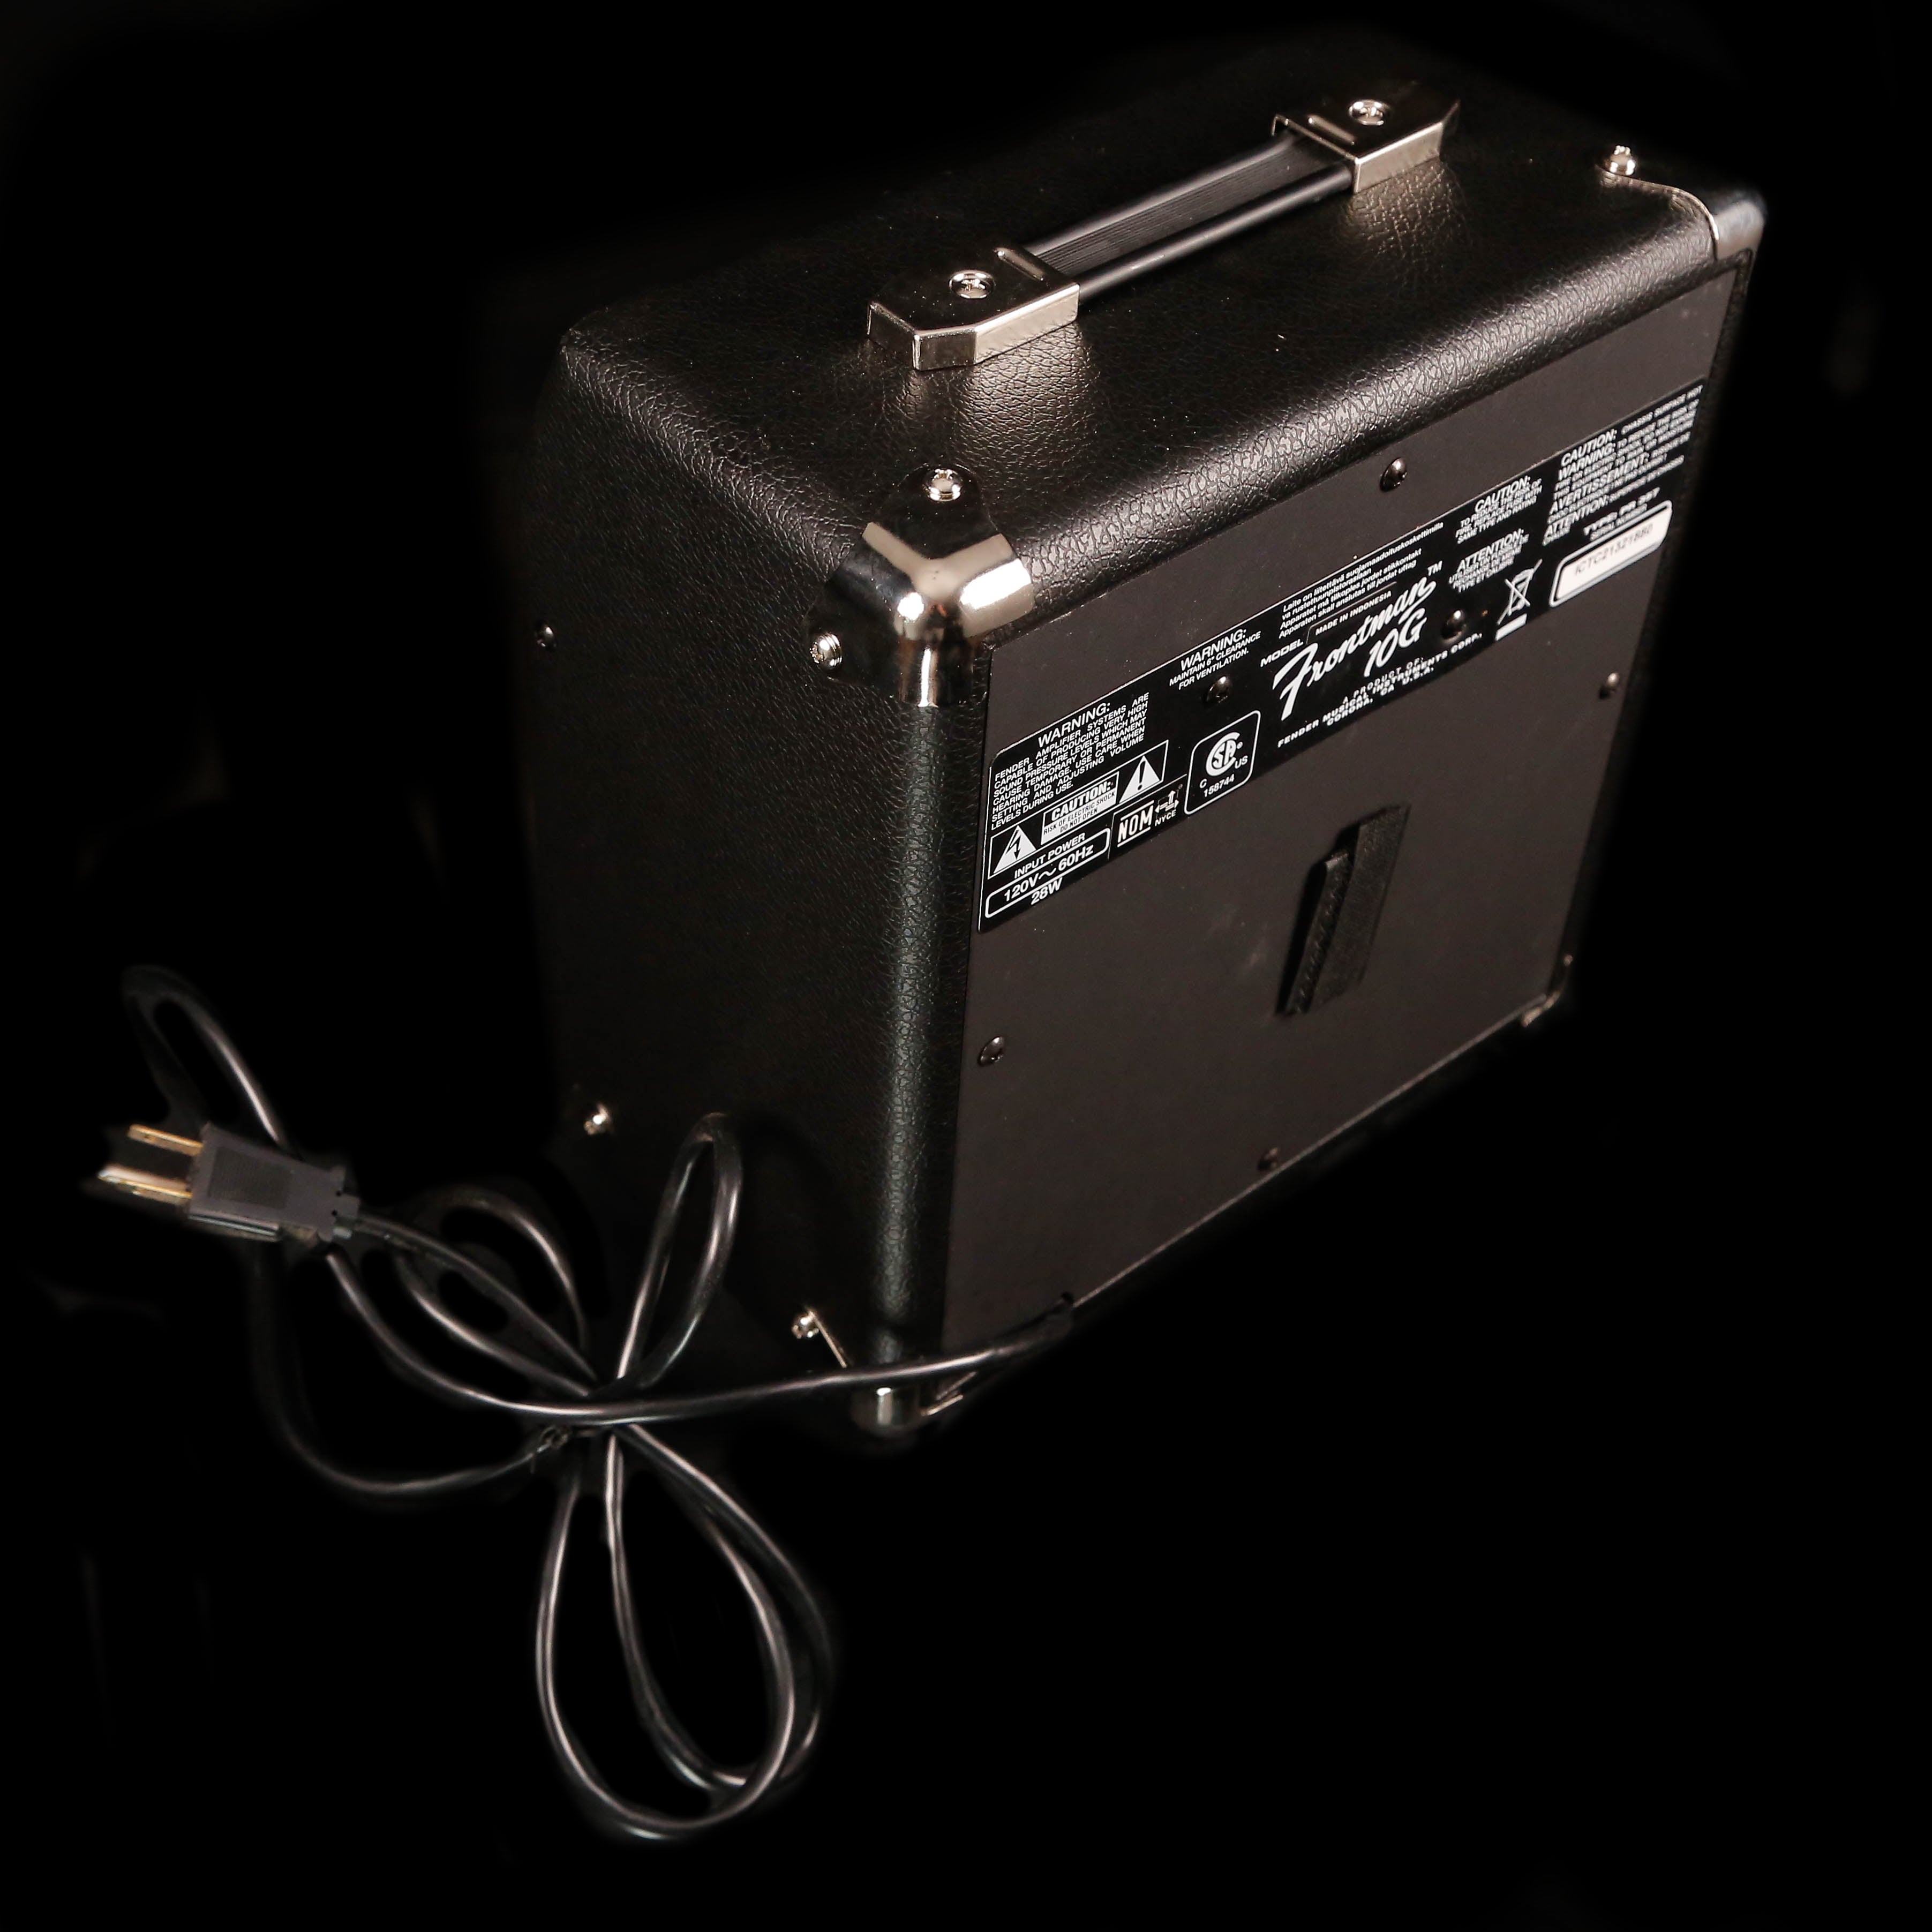 Fender Frontman 10G 10W Combo Guitar Amplifier, 120V